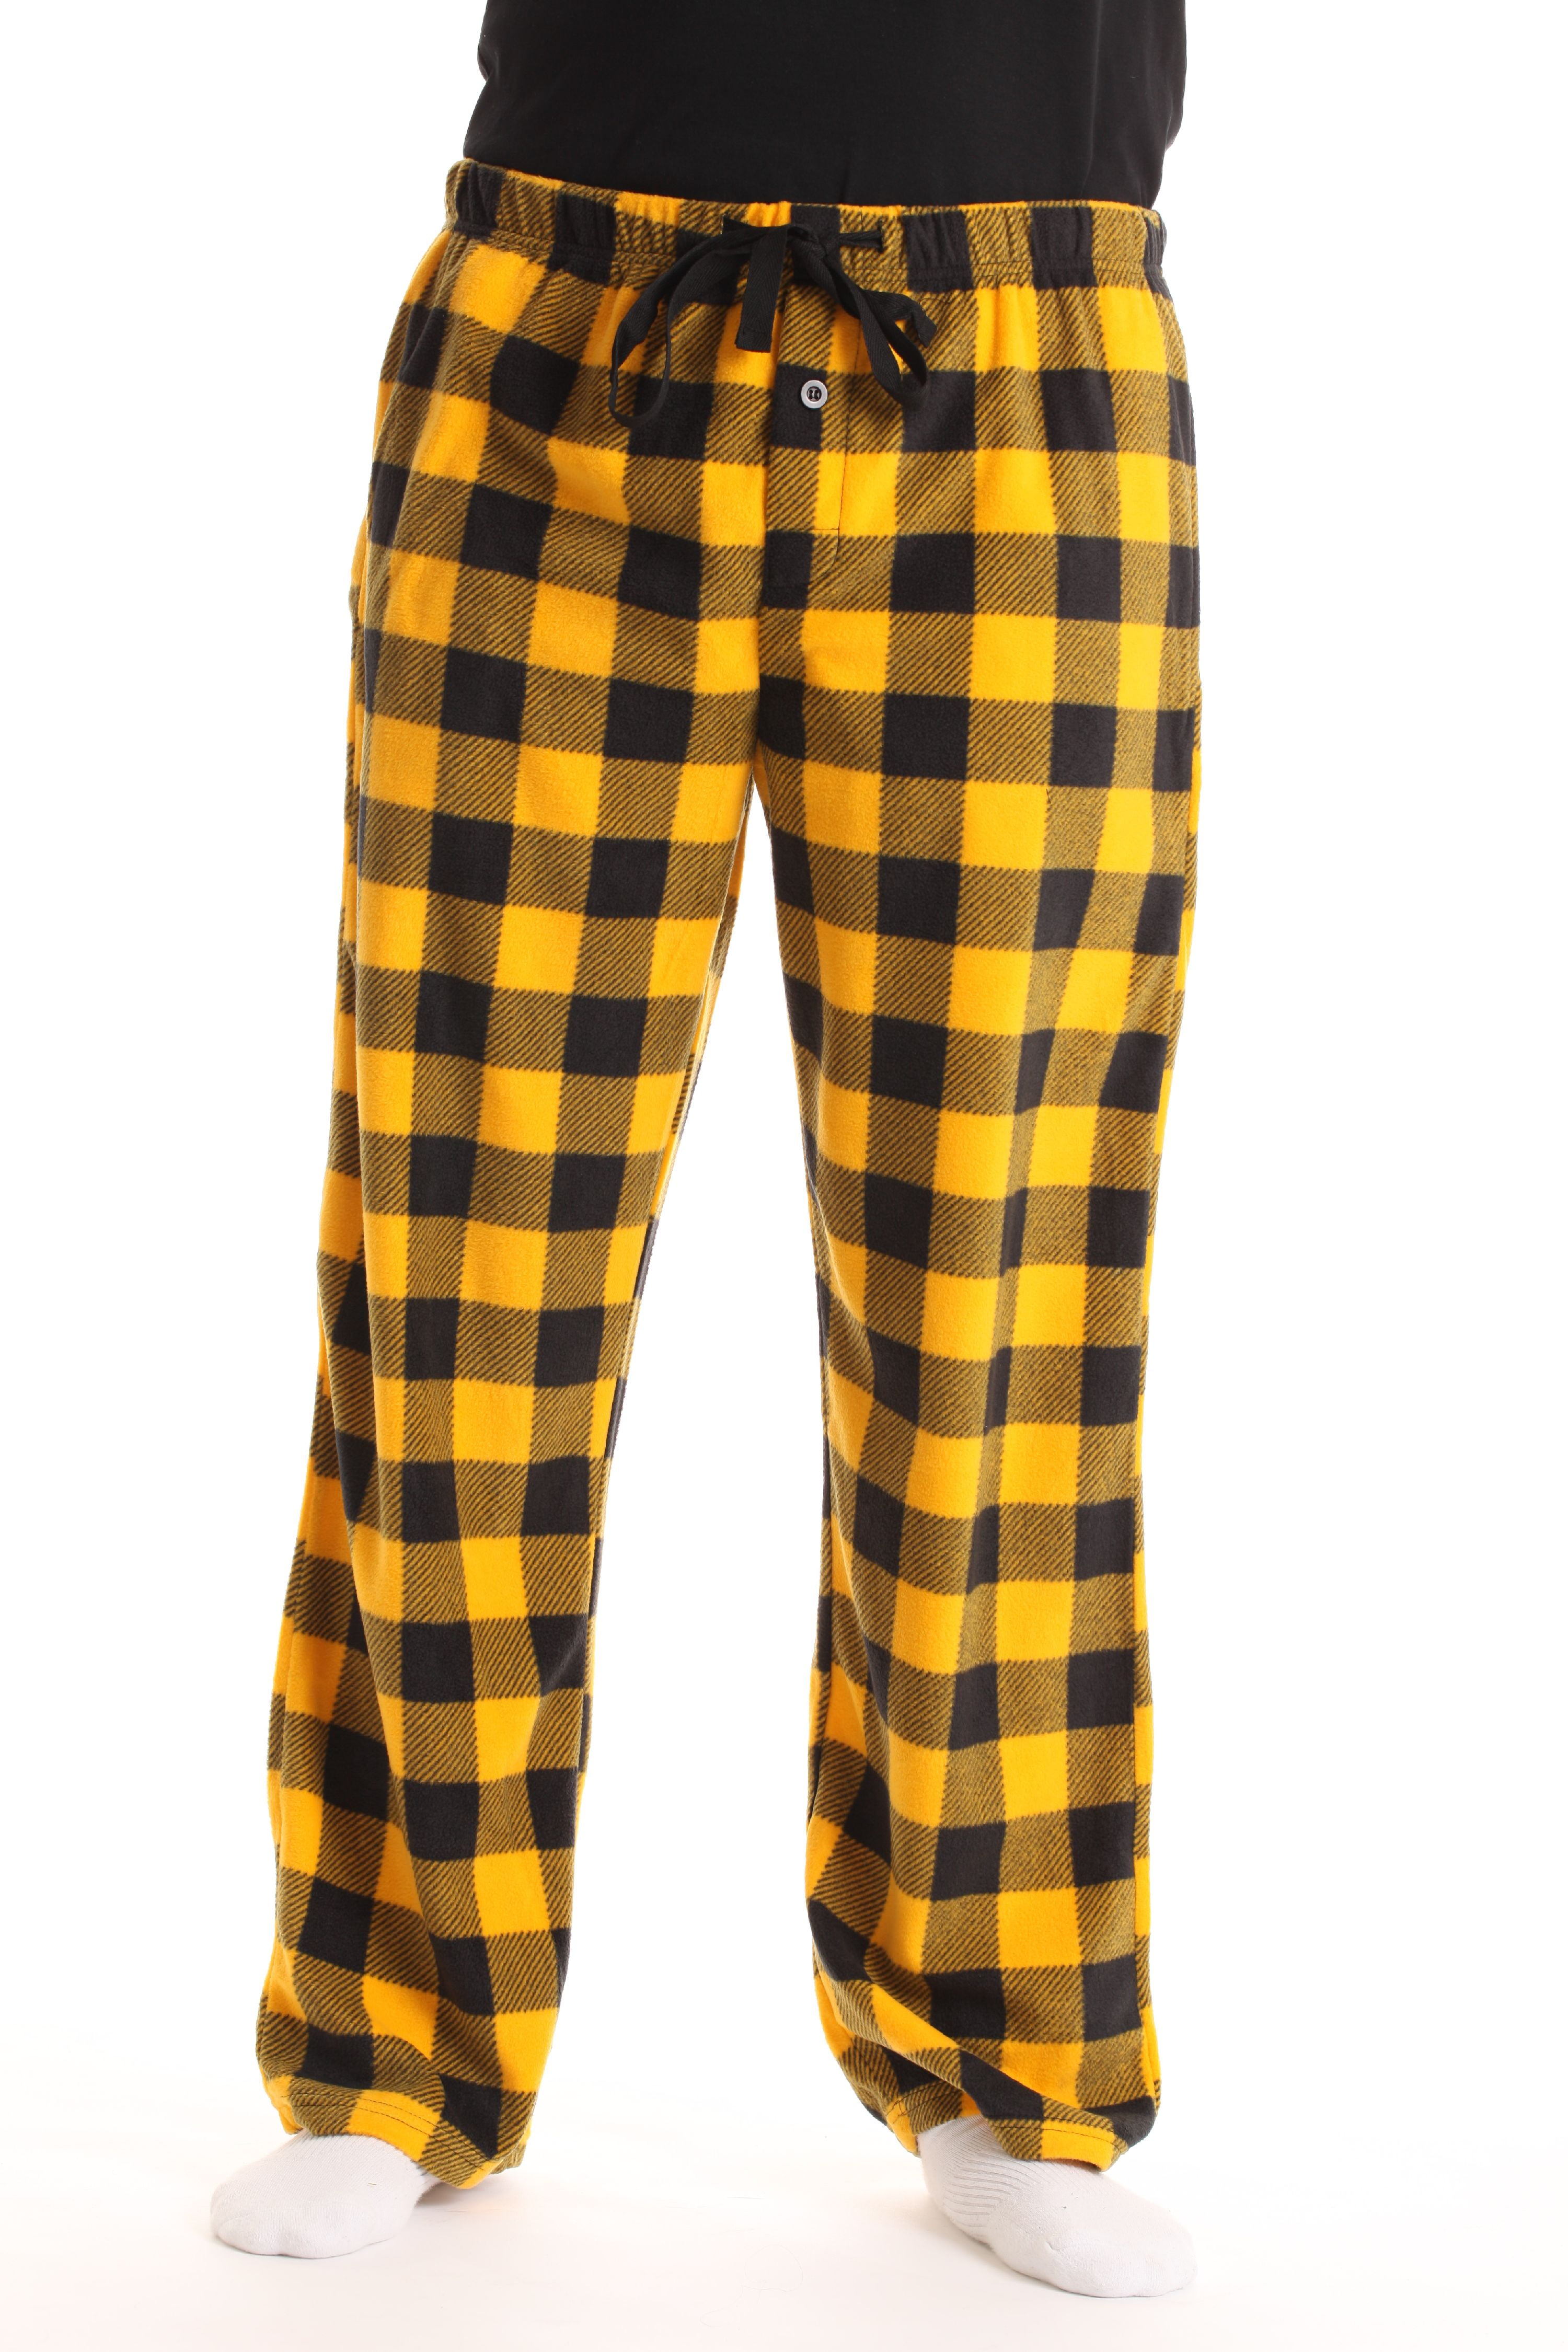 #FollowMe Microfleece Mens Pajama Pants with Pockets (Gold Buffalo ...